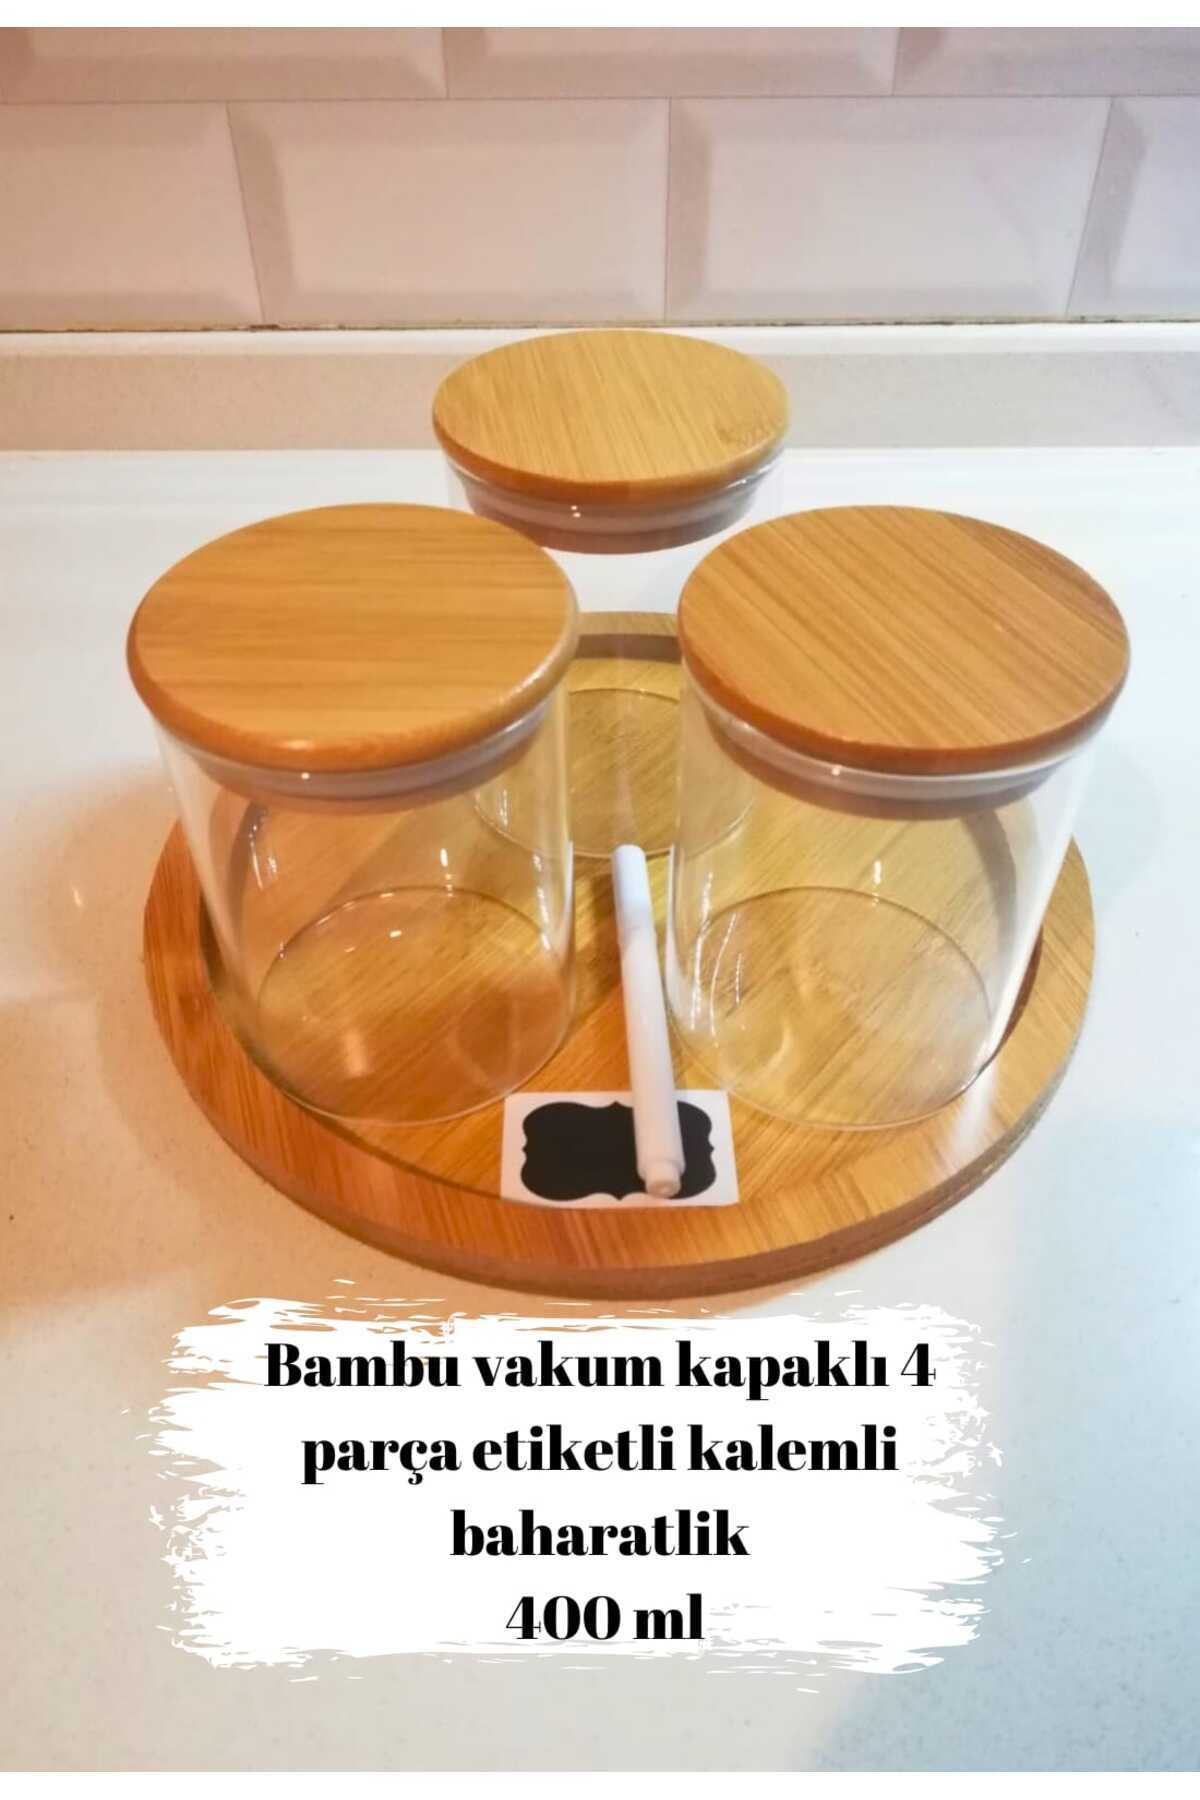 BRE HOME 4 Parça Tezgah Üstü Bambu Kapaklı Standlı Kavanoz Seti - 400 ml - Çay Şeker Kahve Kavanozu